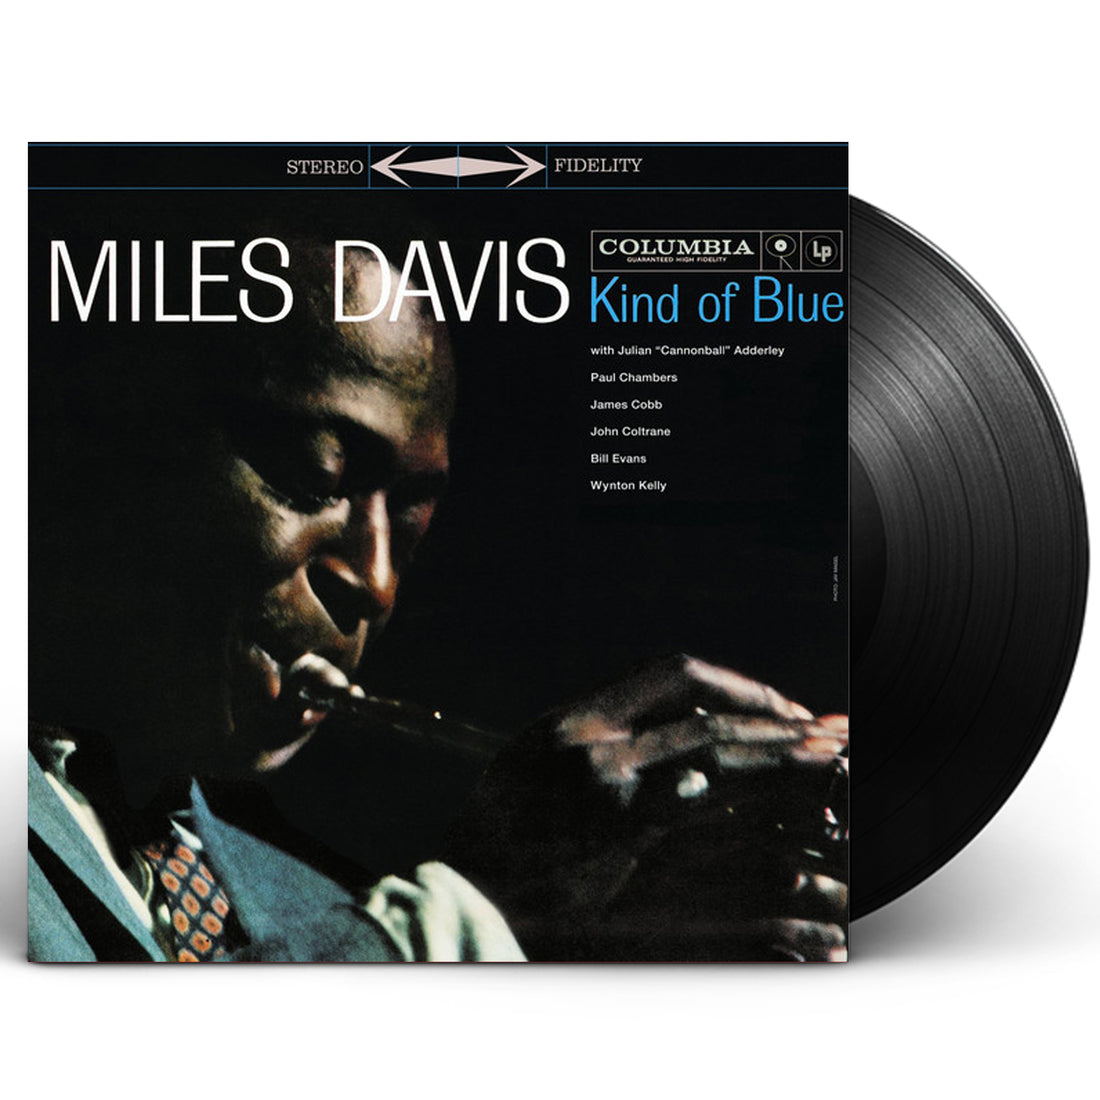 Miles Davis "Kind of Blue" LP 180 Gram Vinyl